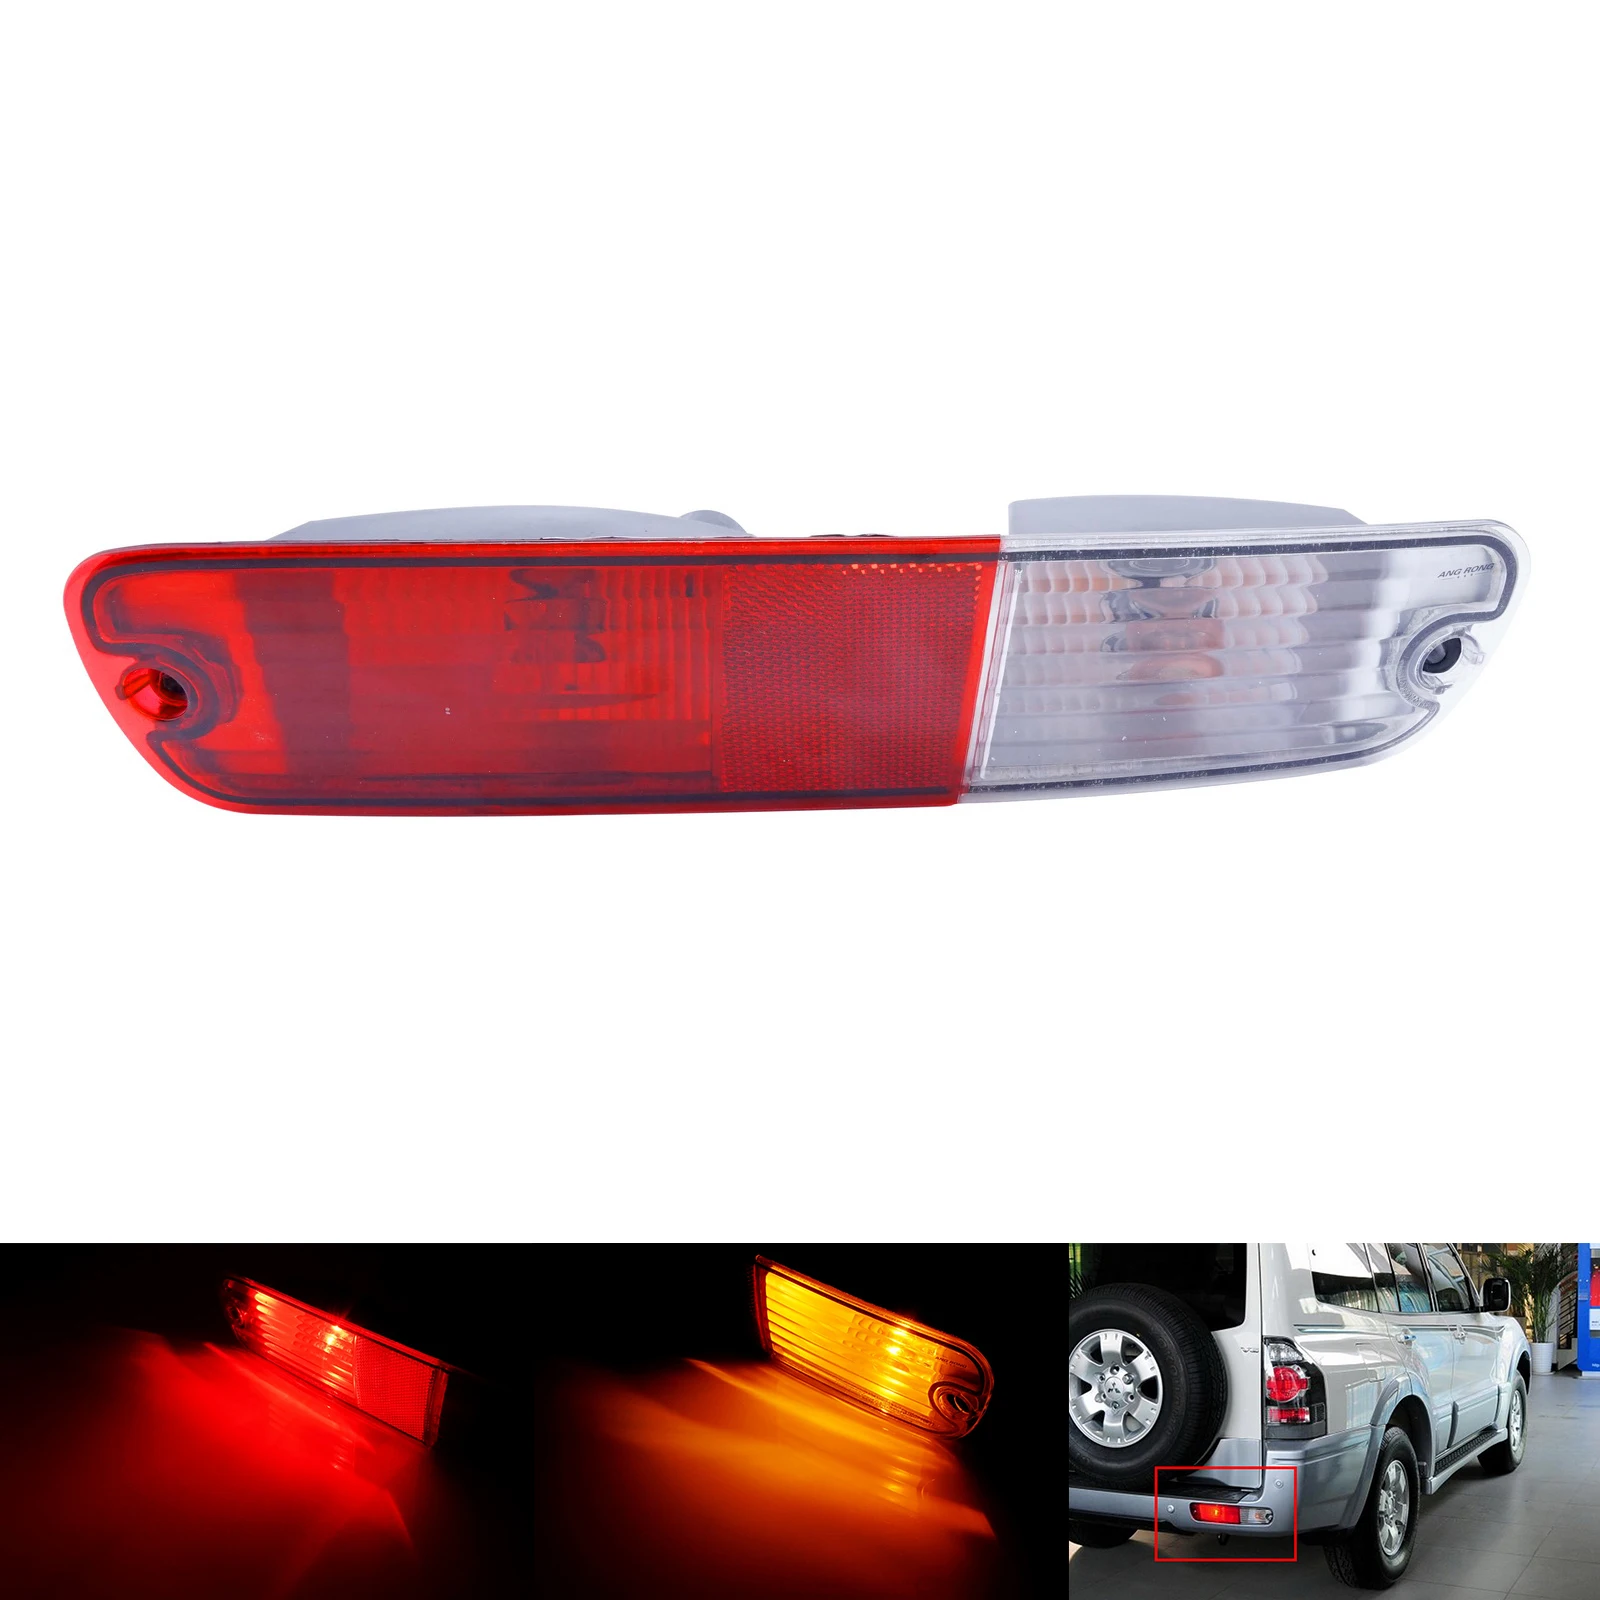 

ANGRONG Rear Bumper Light Lamp Right O/S For Mitsubishi Pajero Montero Shogun V73 V77 02-06